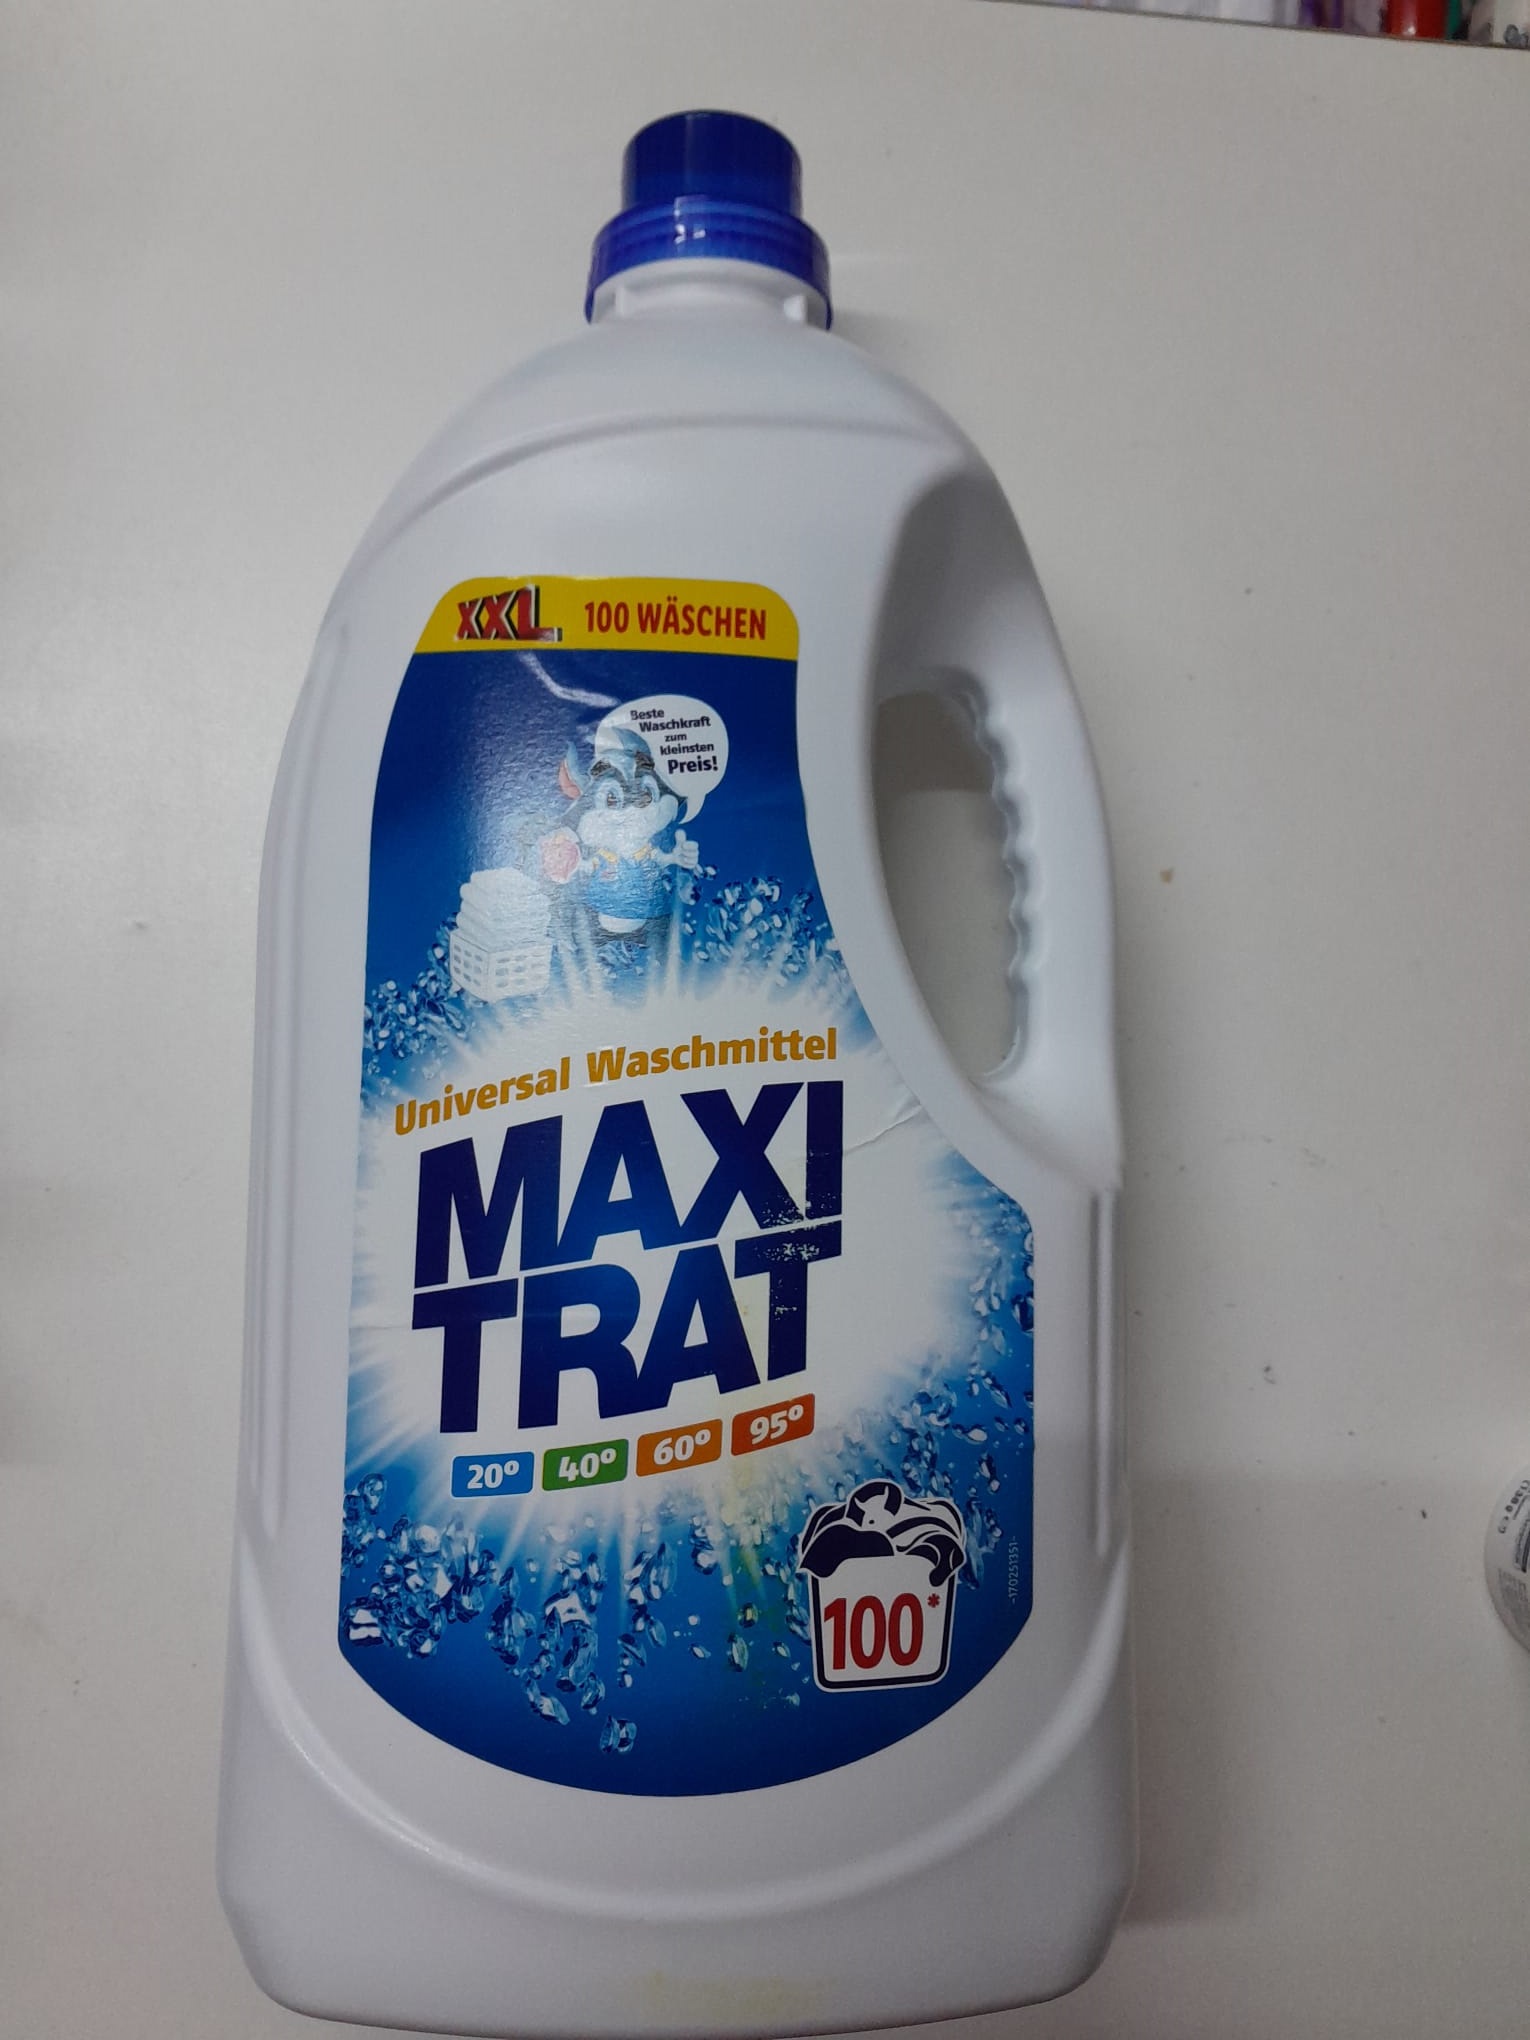 lichid Trat detergent – Maxi spalari universal, 100 de